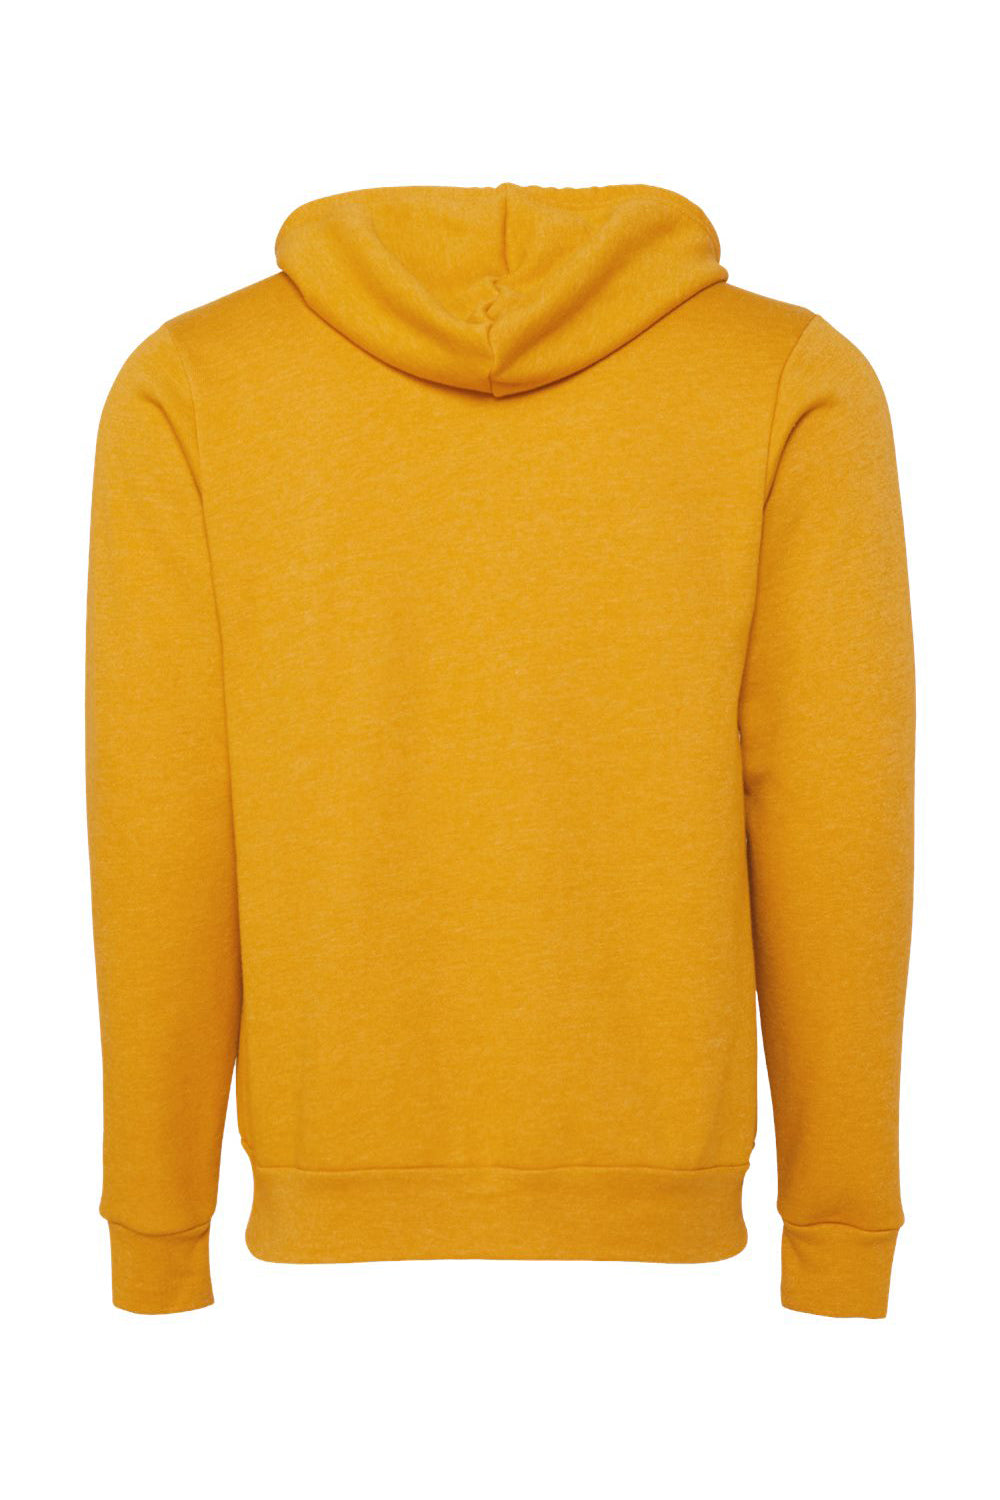 Bella + Canvas BC3739/3739 Mens Fleece Full Zip Hooded Sweatshirt Hoodie Heather Mustard Yellow Flat Back